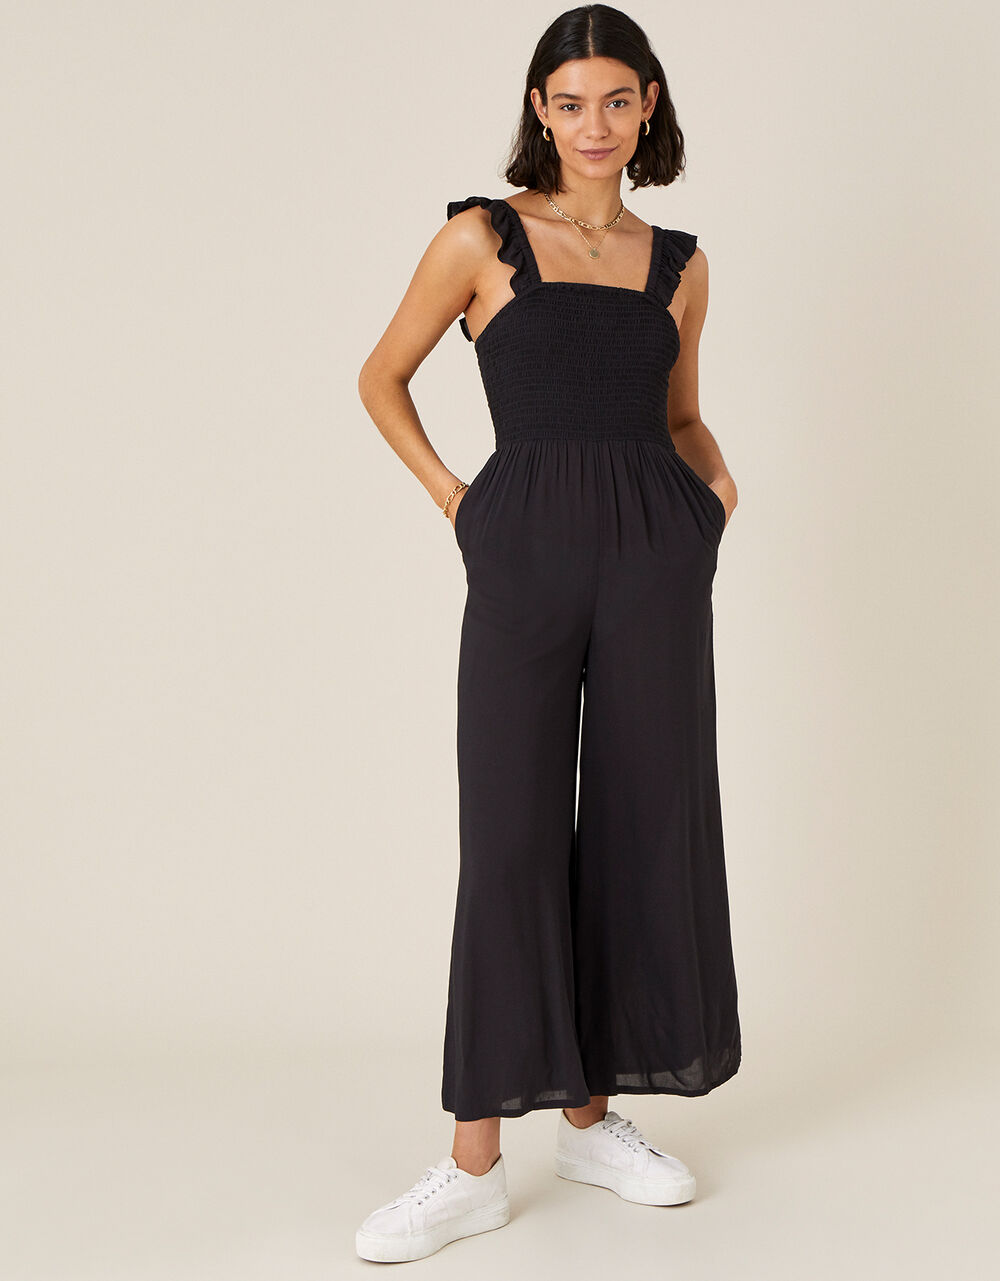 Women Women's Clothing | Ruffle Strap Wide Leg Jumpsuit Black - NO49084